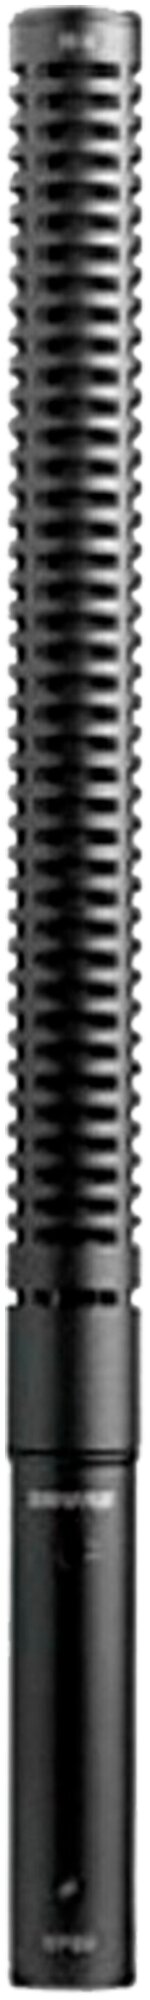 Shure VP89M, разъем: XLR 5 pin (M), черный - фото №1